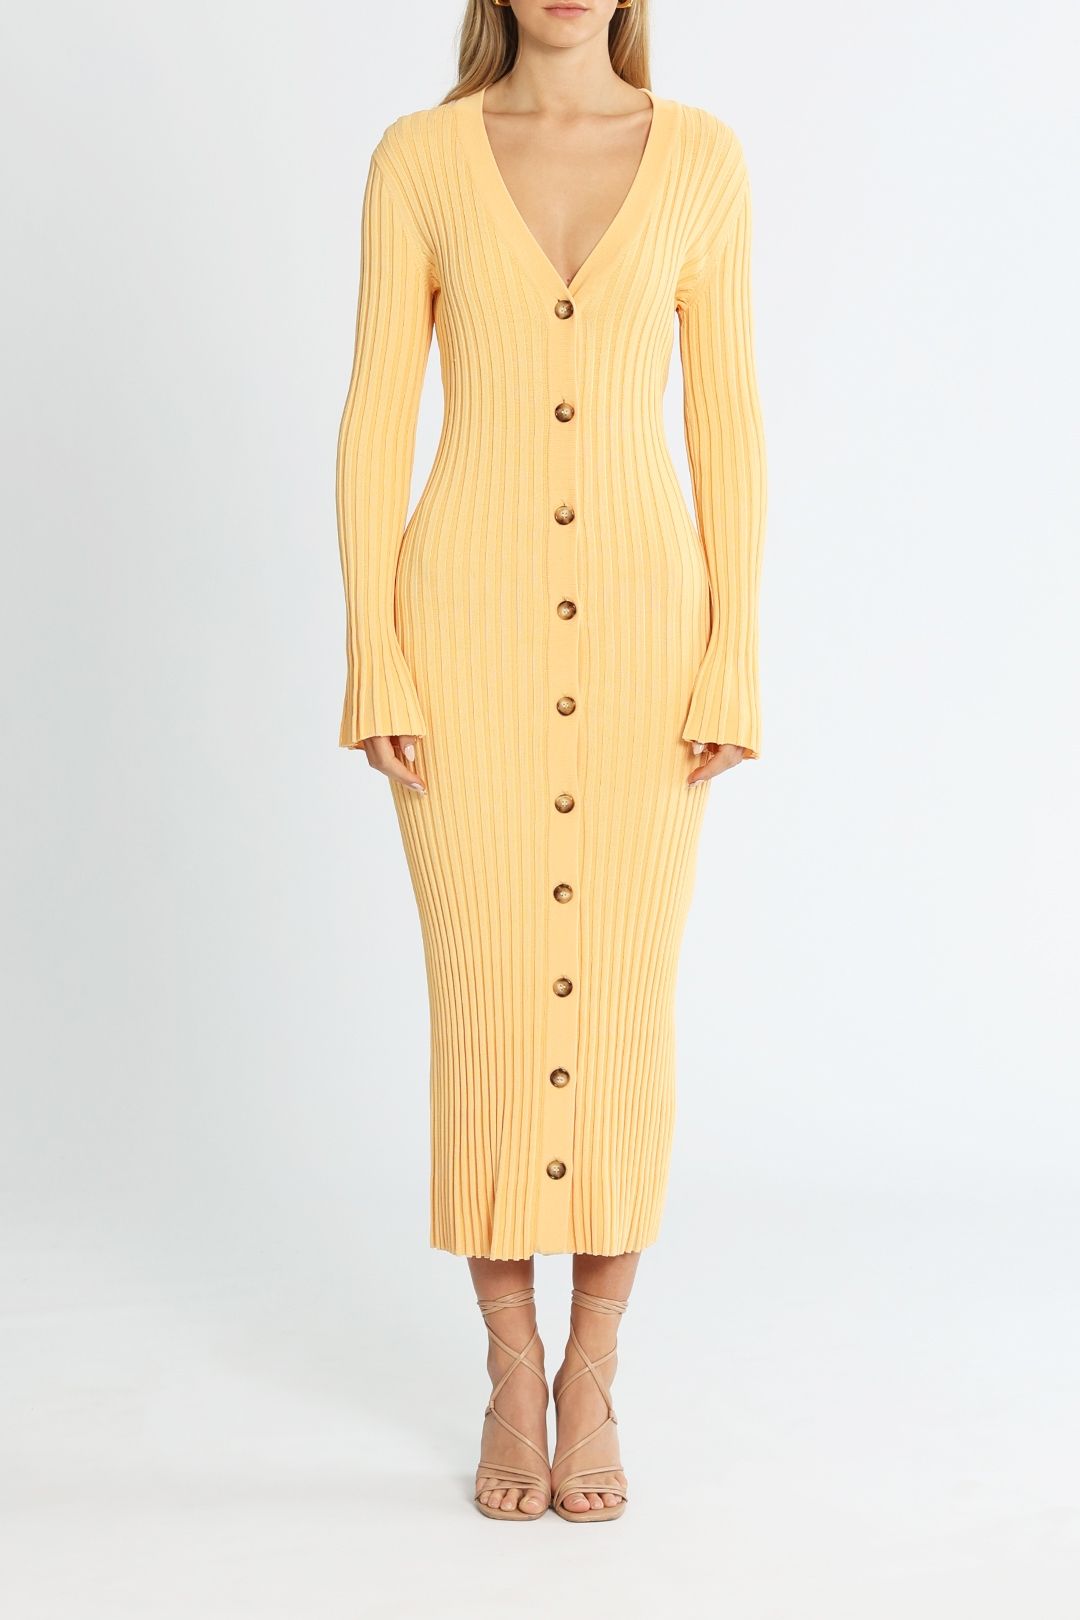 Yellow Knit Long Sleeve Dress  Long sleeve dress, Yellow knit, Long sleeve  knit dress